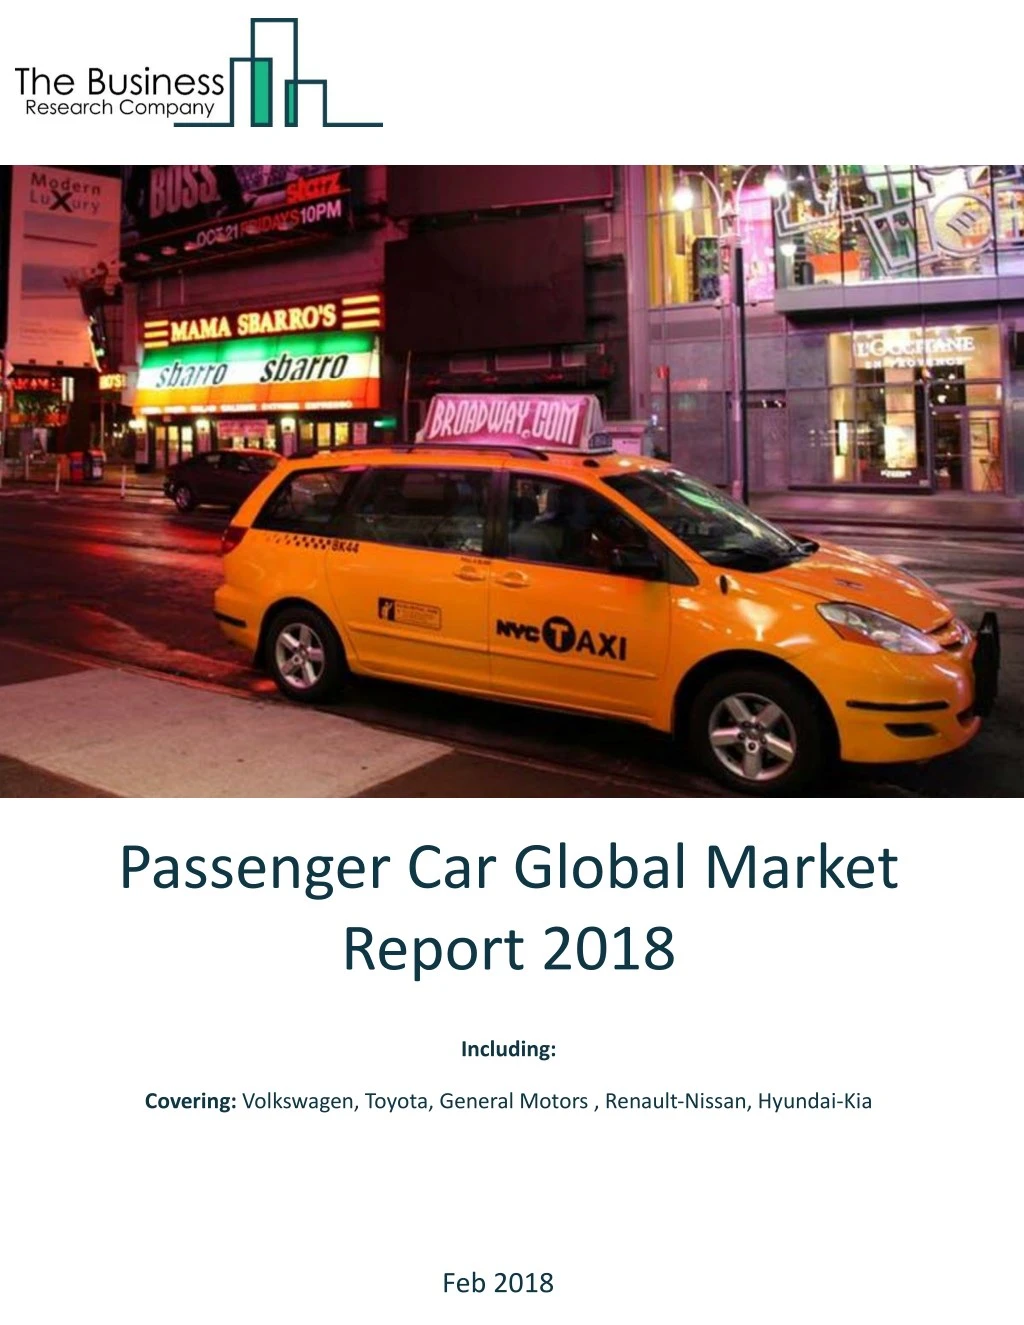 passenger car global market report 2018